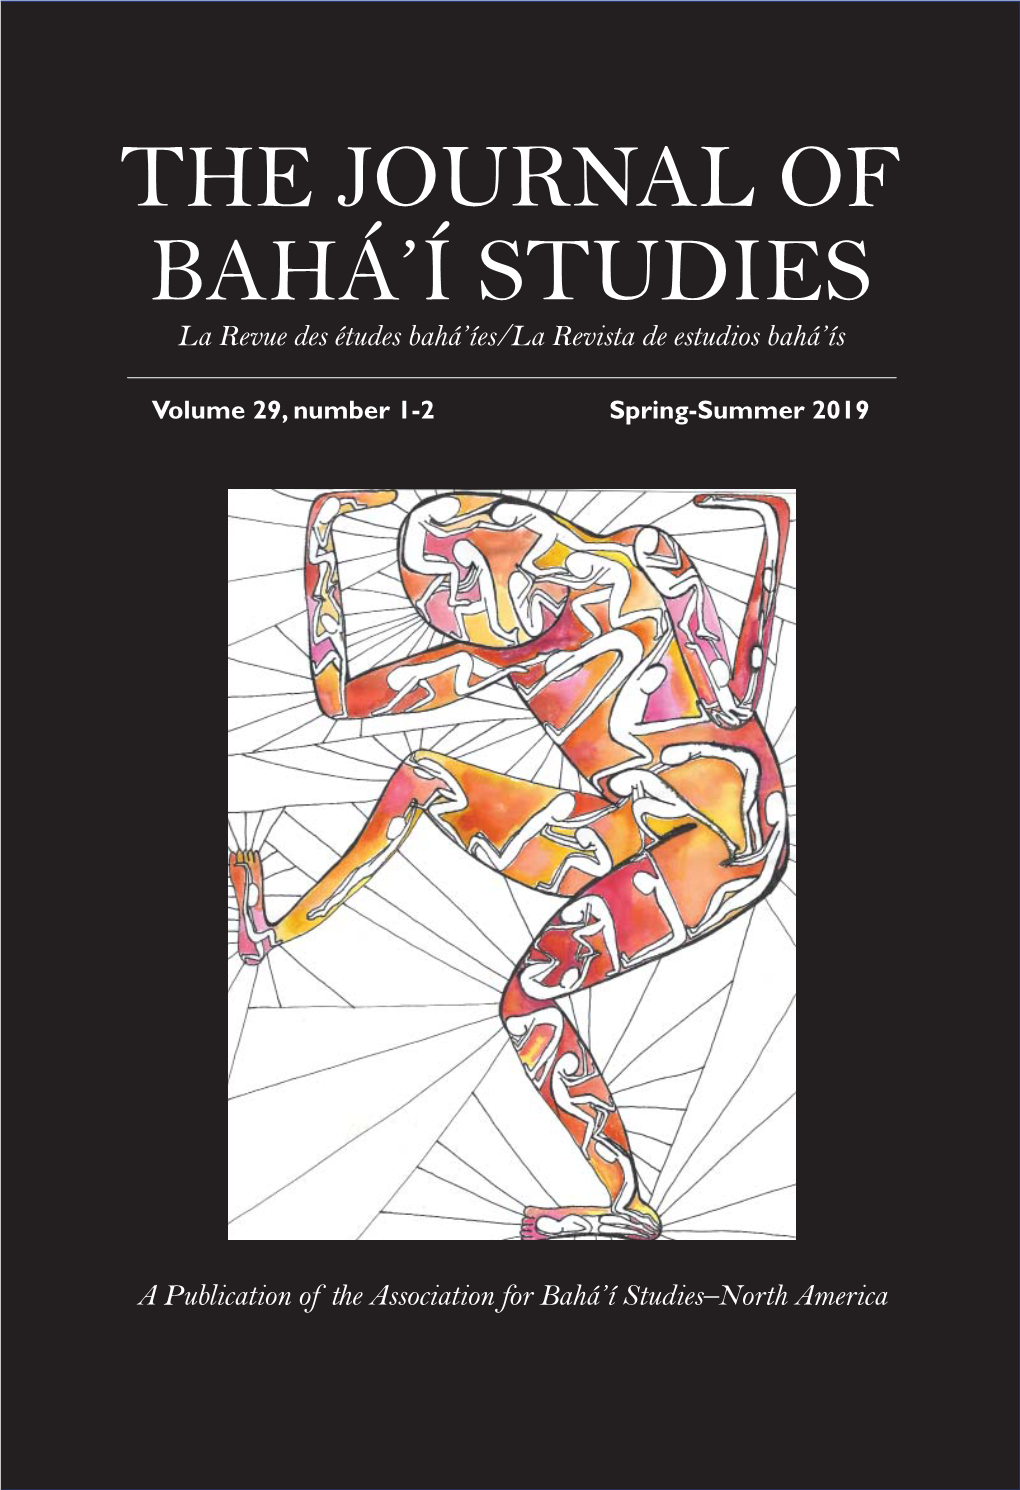 The Journal of Bahá'í Studies